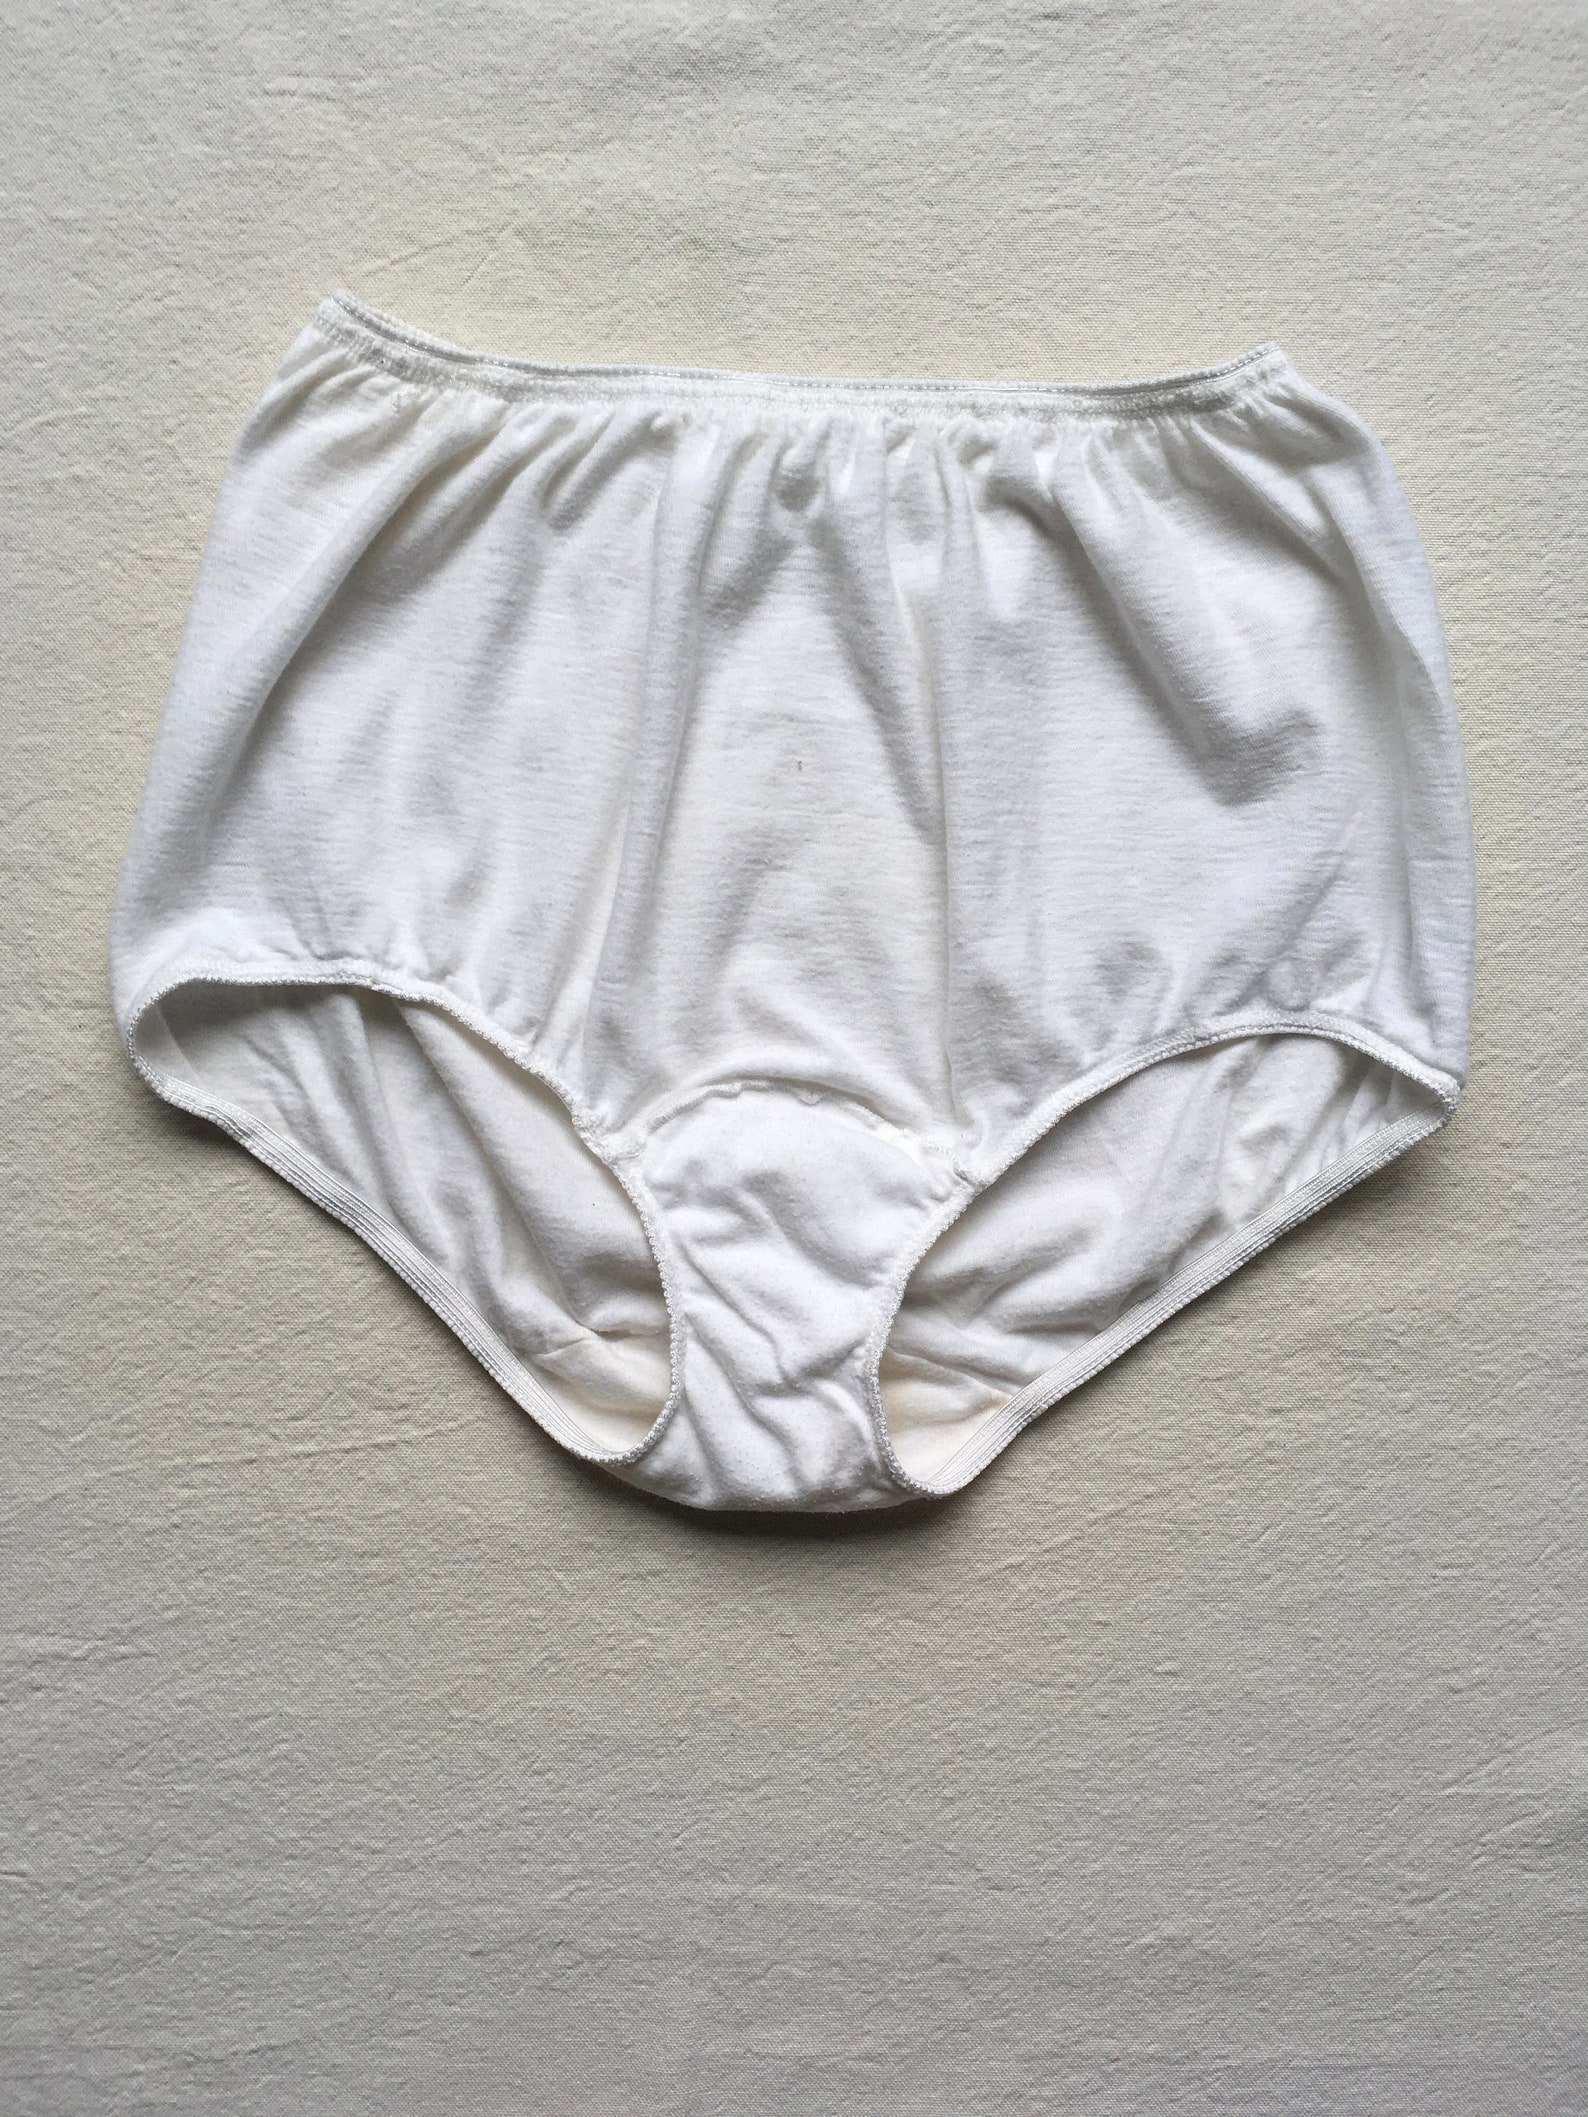 Vintage 60s carters Spanky pants white cotton high waist | Etsy